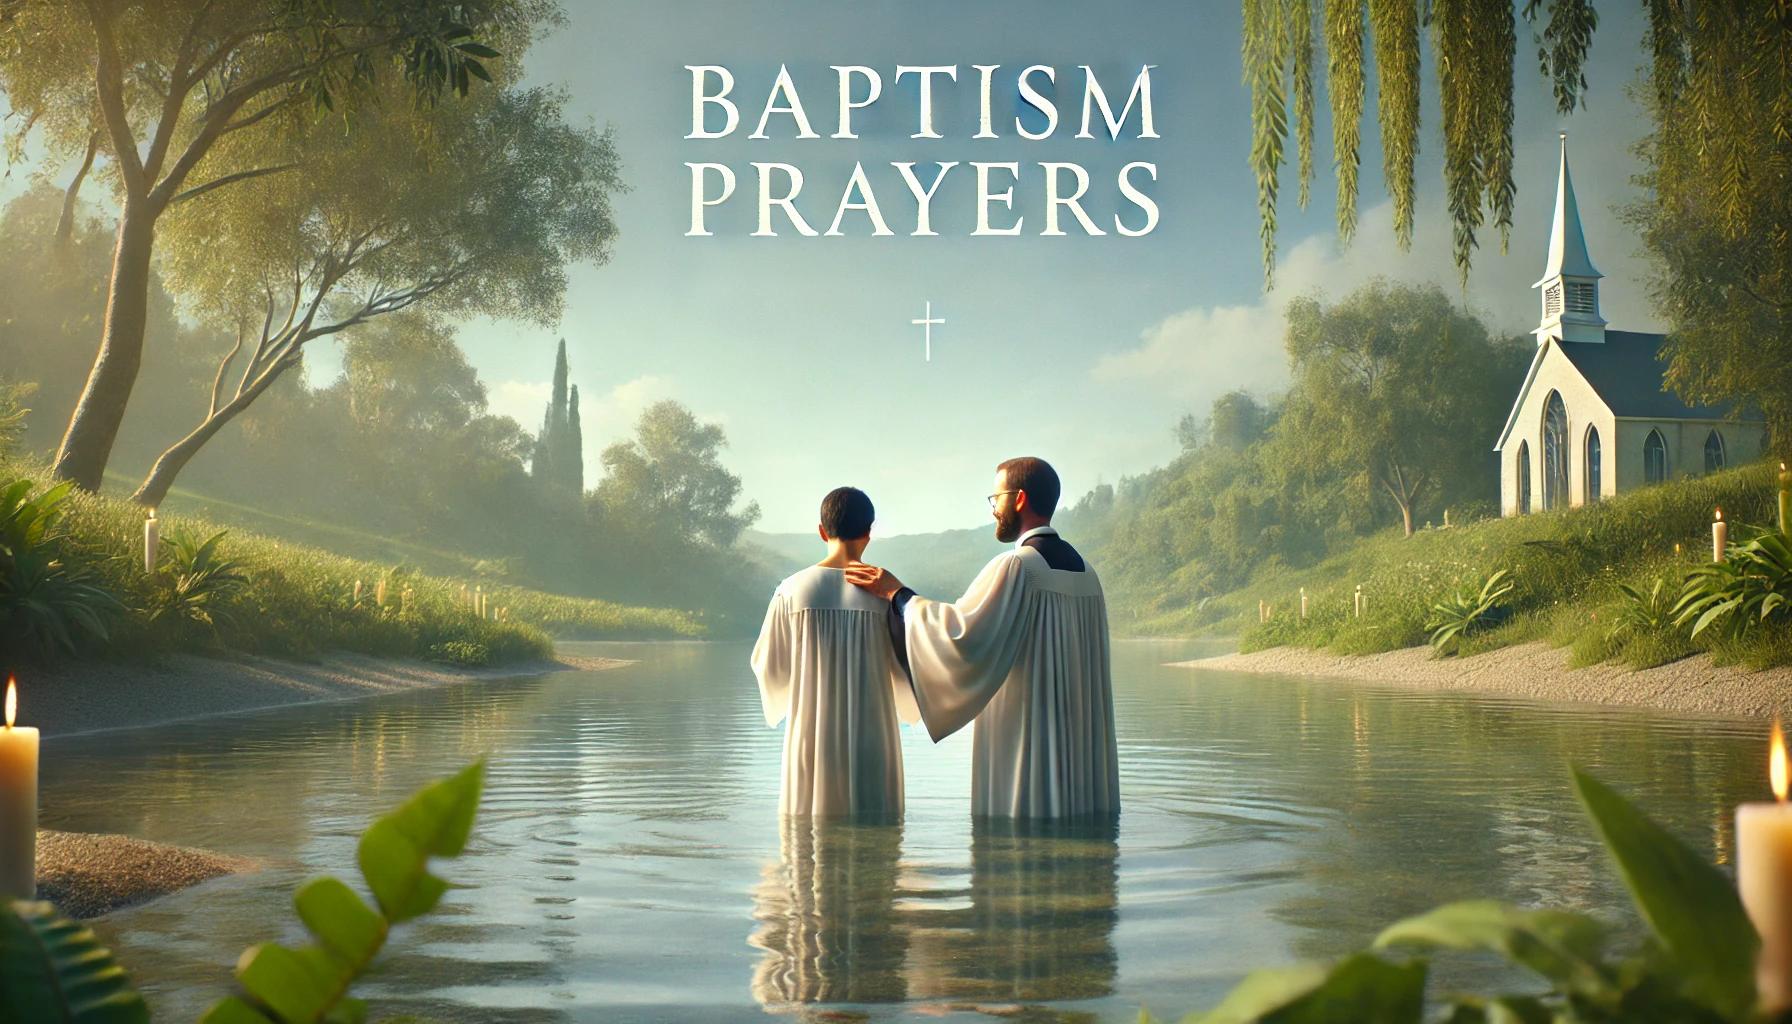 15 Baptism Prayers